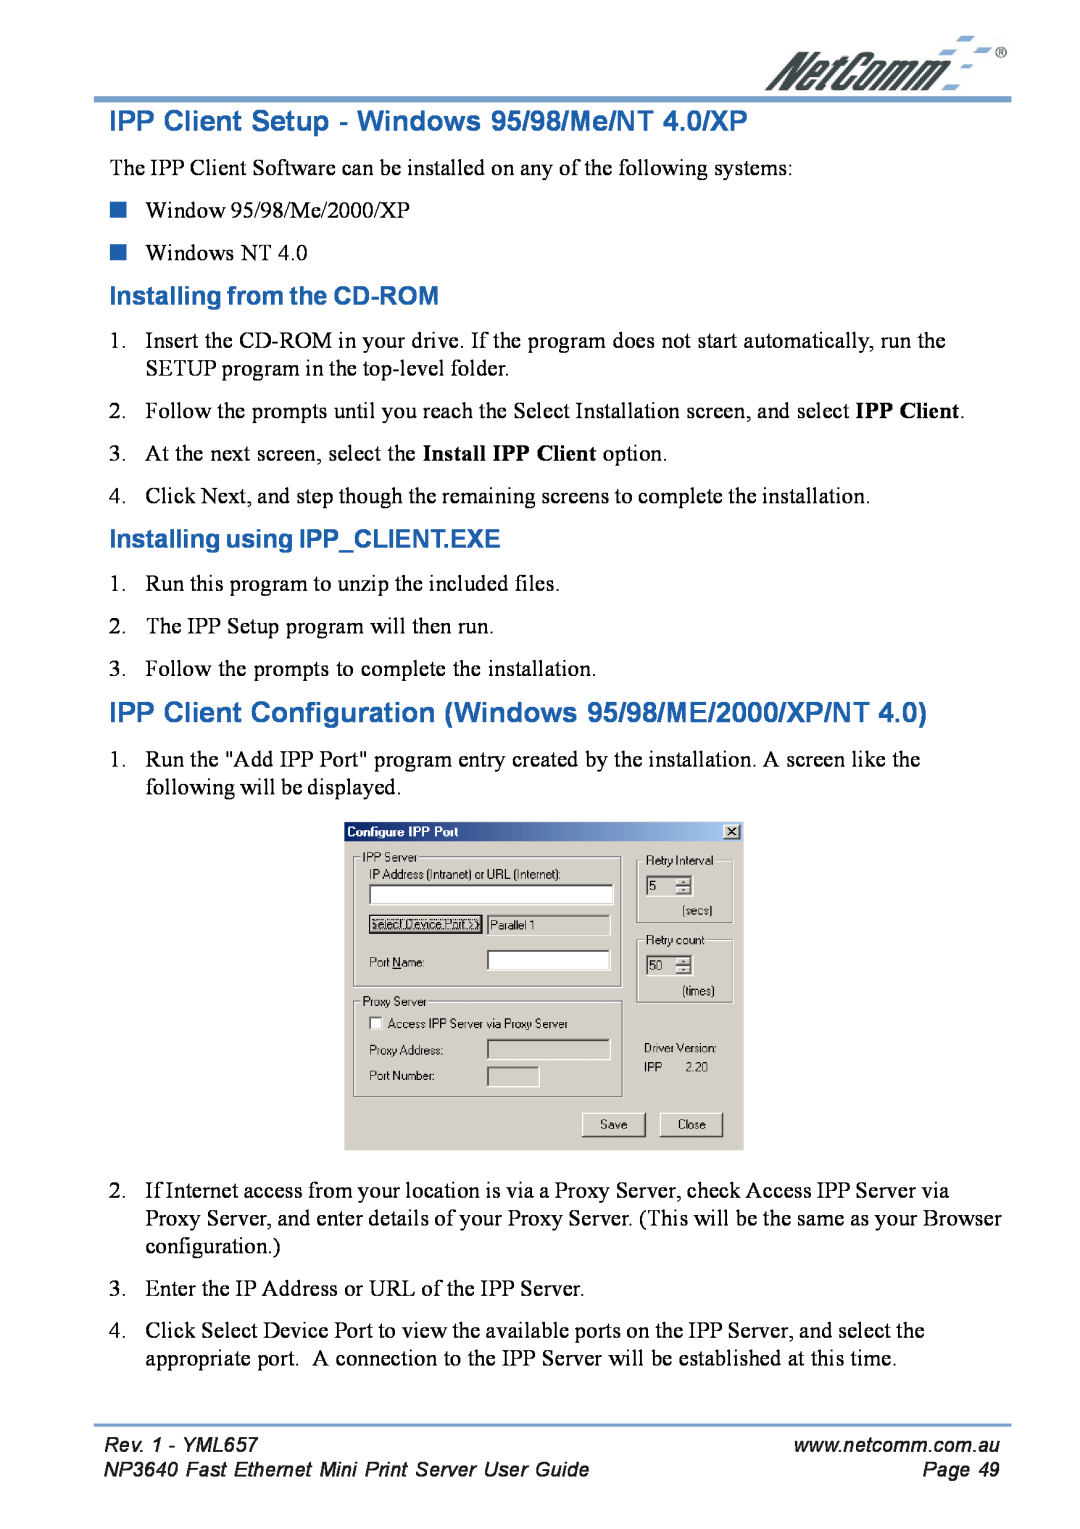 NetComm NP3640 manual IPP Client Setup - Windows 95/98/Me/NT 4.0/XP, IPP Client Configuration Windows 95/98/ME/2000/XP/NT 